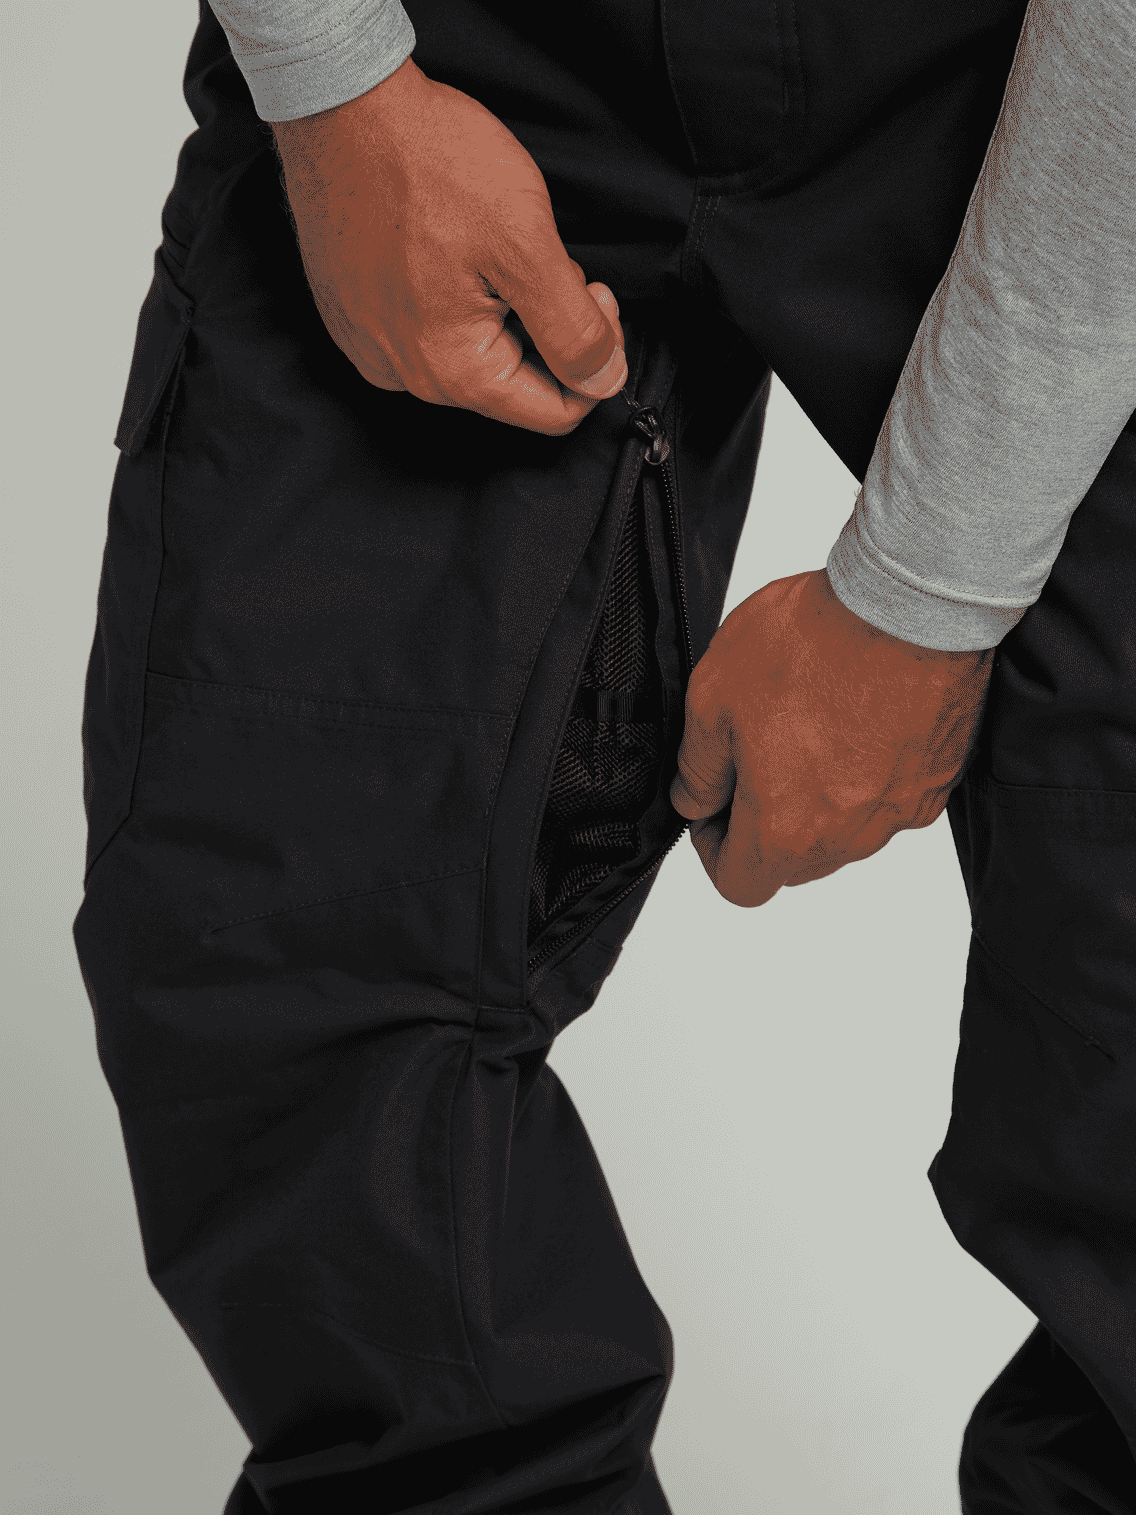 Burton Mens Cargo 2L Pants - Regular Fit